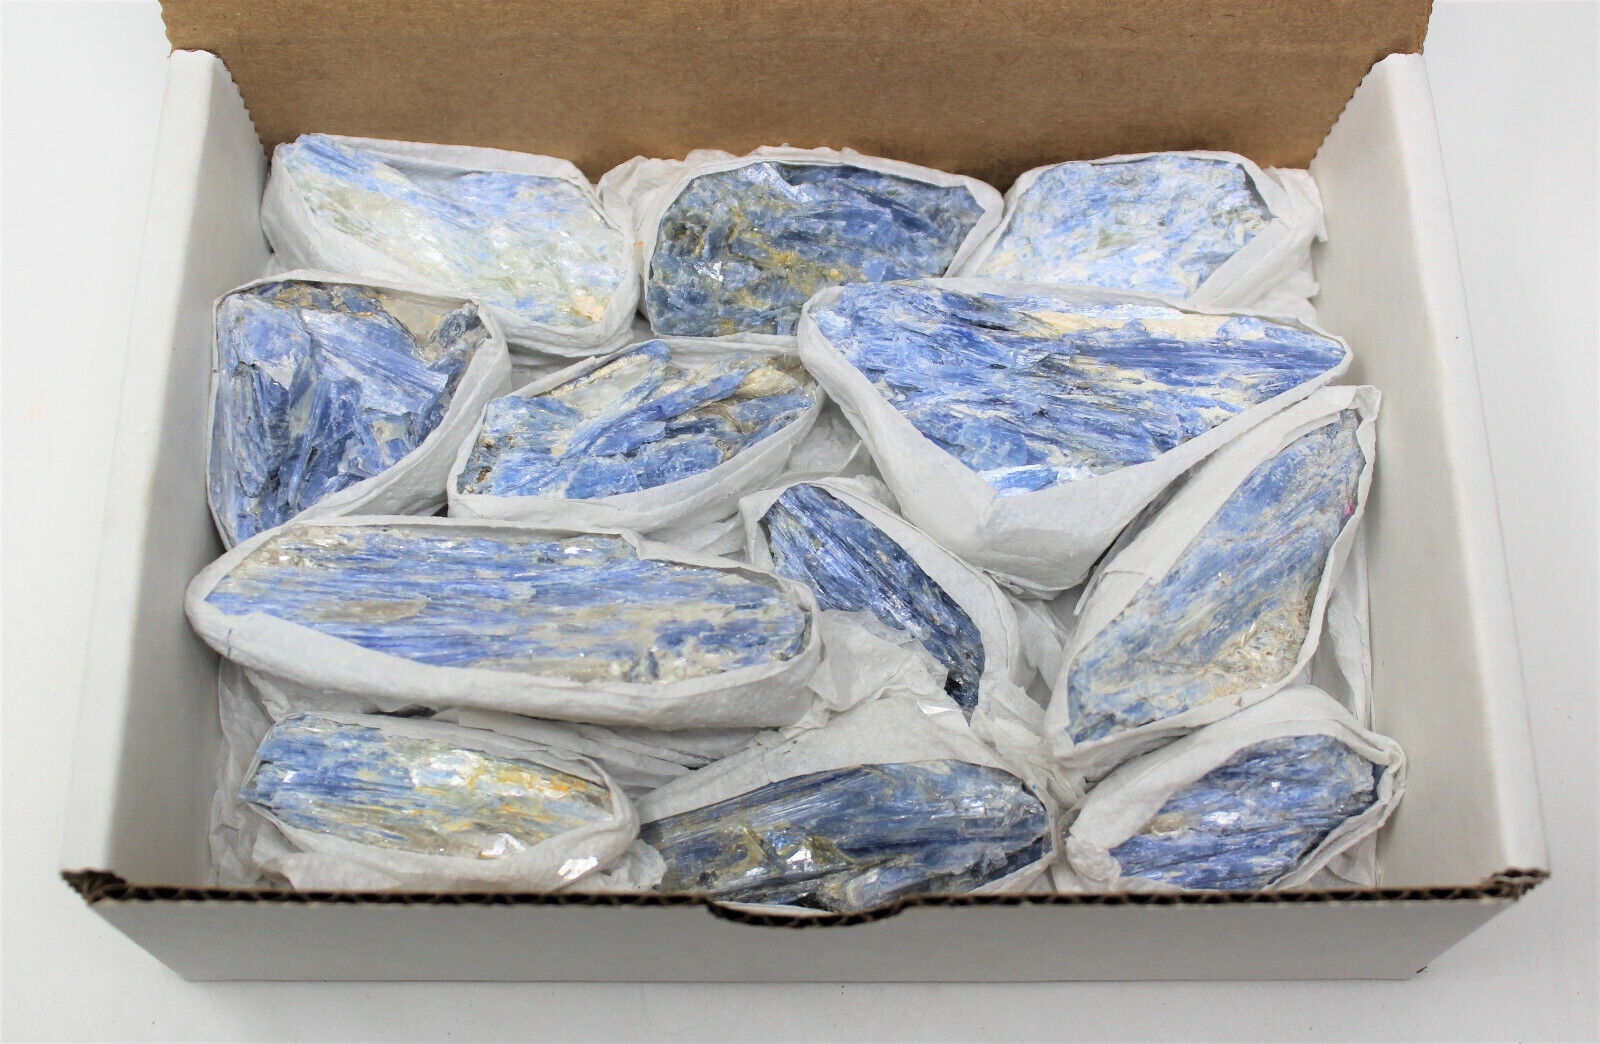 Bulk Large Natural Blue Kyanite in Matrix Crystal Chunks: 9-12 Piece Box Lot